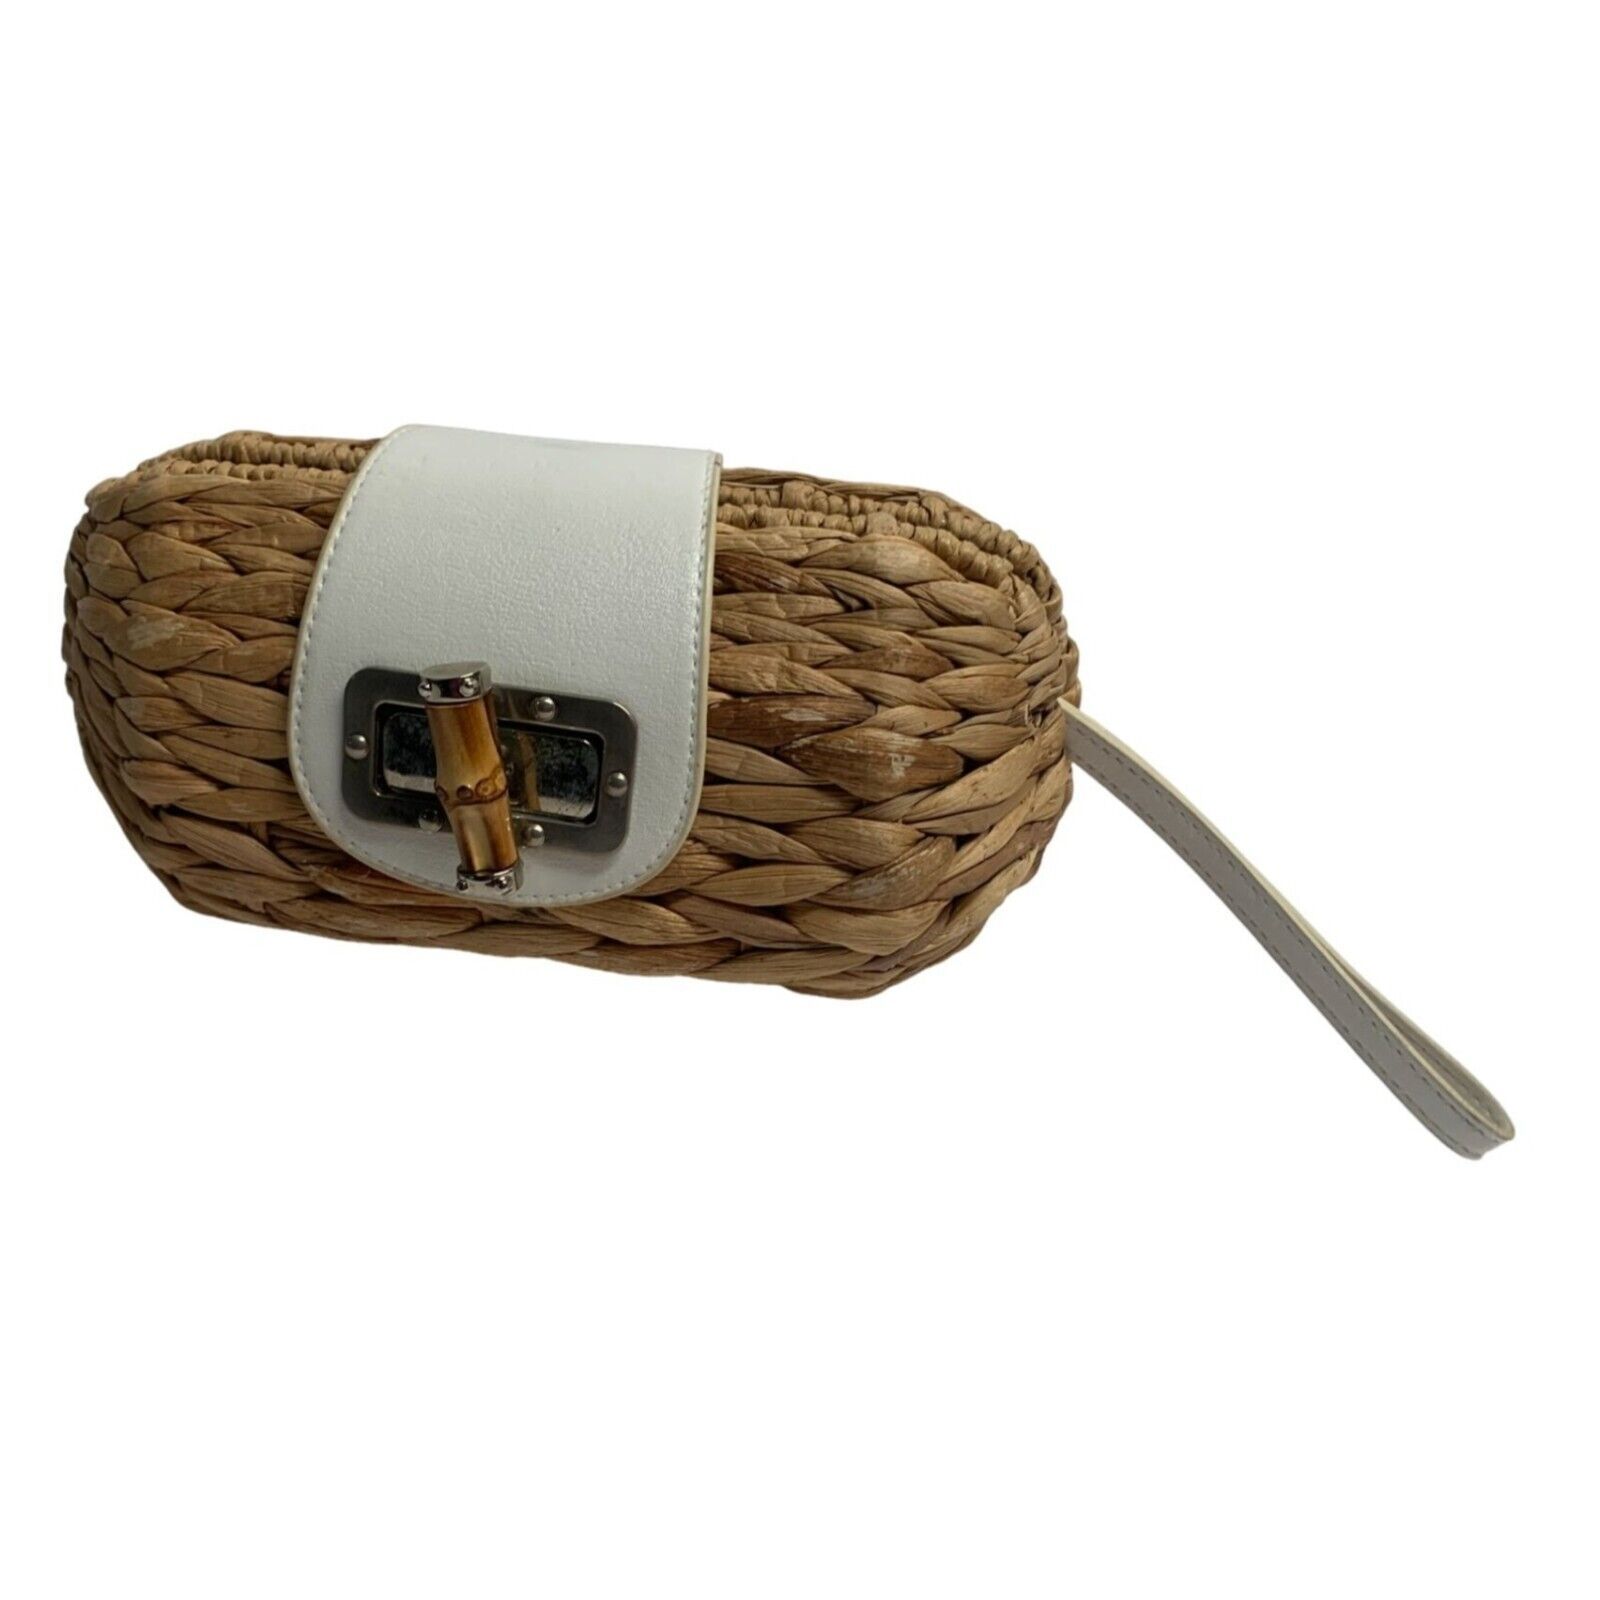 Primary image for Cato Purse Natural Straw Wristlet Handbag Clutch Basket